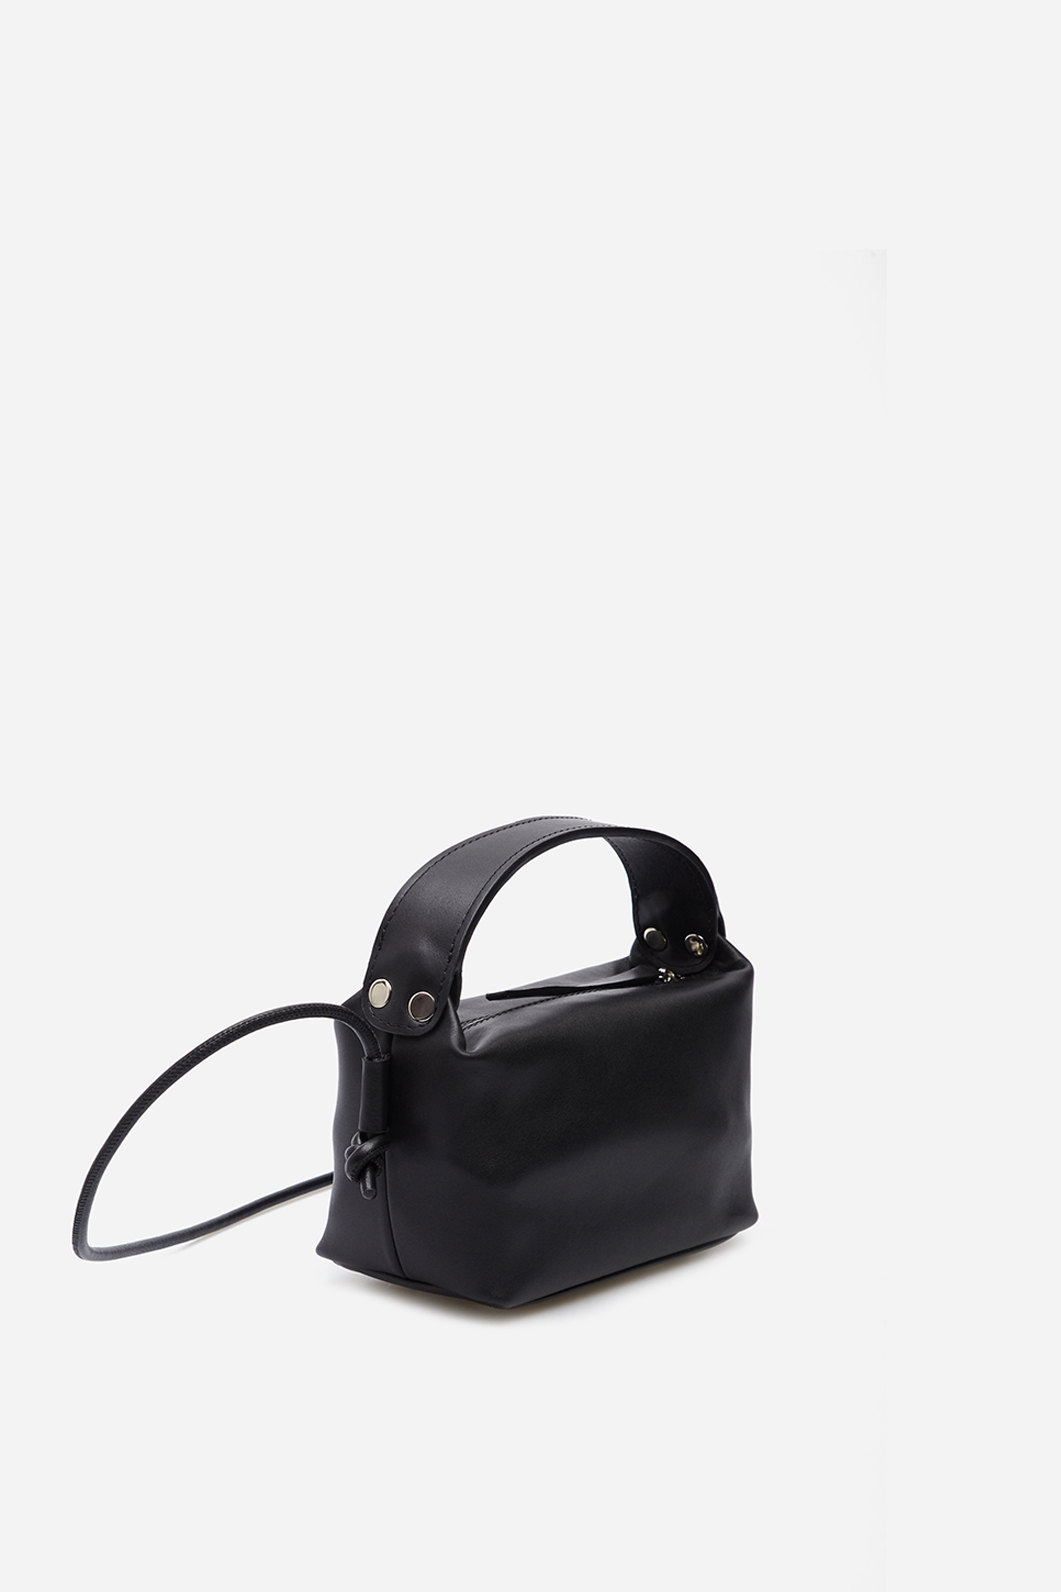 Selma micro black leather
bag /silver/